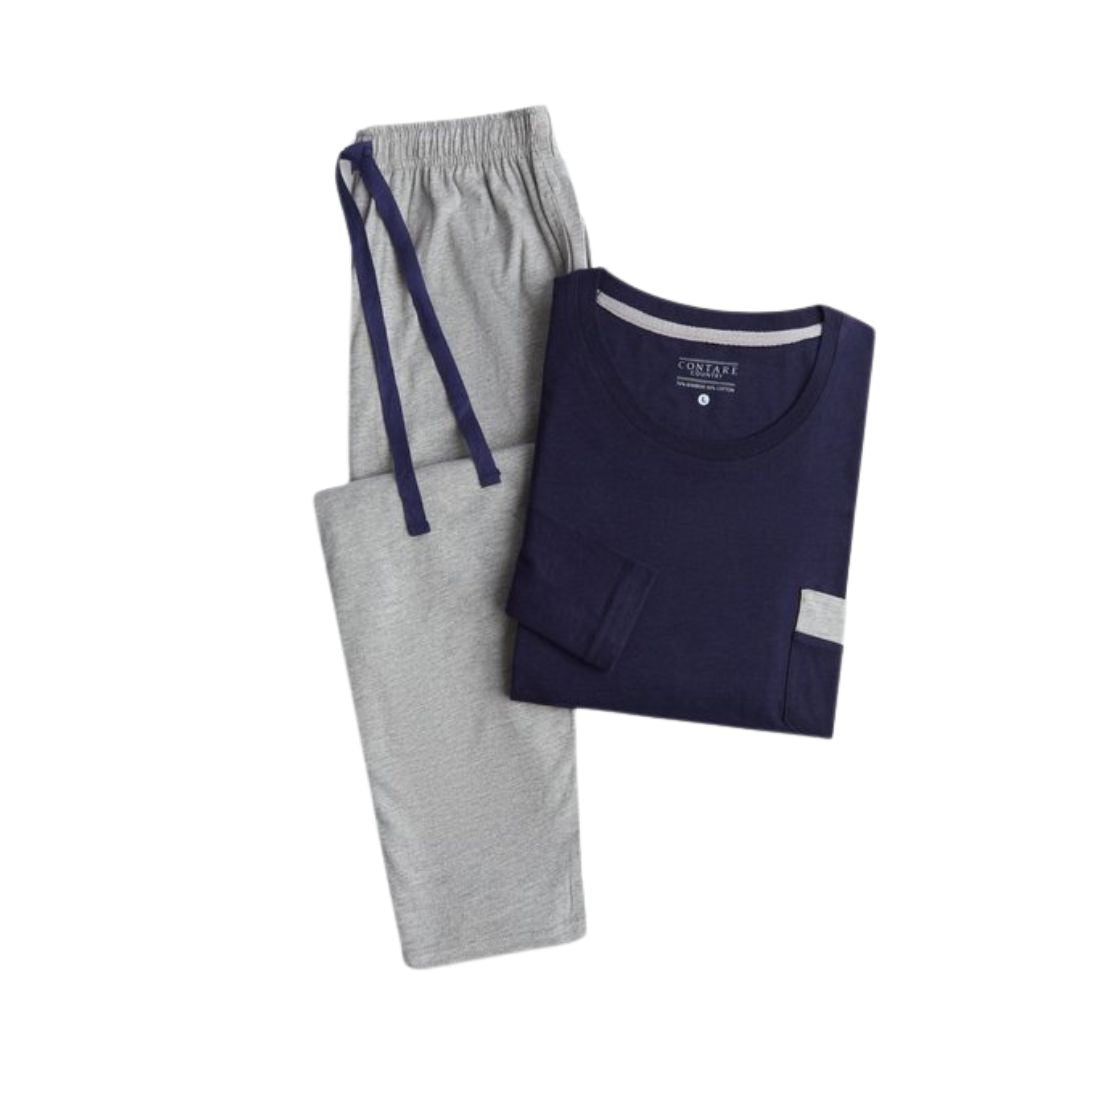 Bamboo Full Length Pyjamas 3XL Navy/Grey Mens Sleepwear by Contare | The Bloke Shop